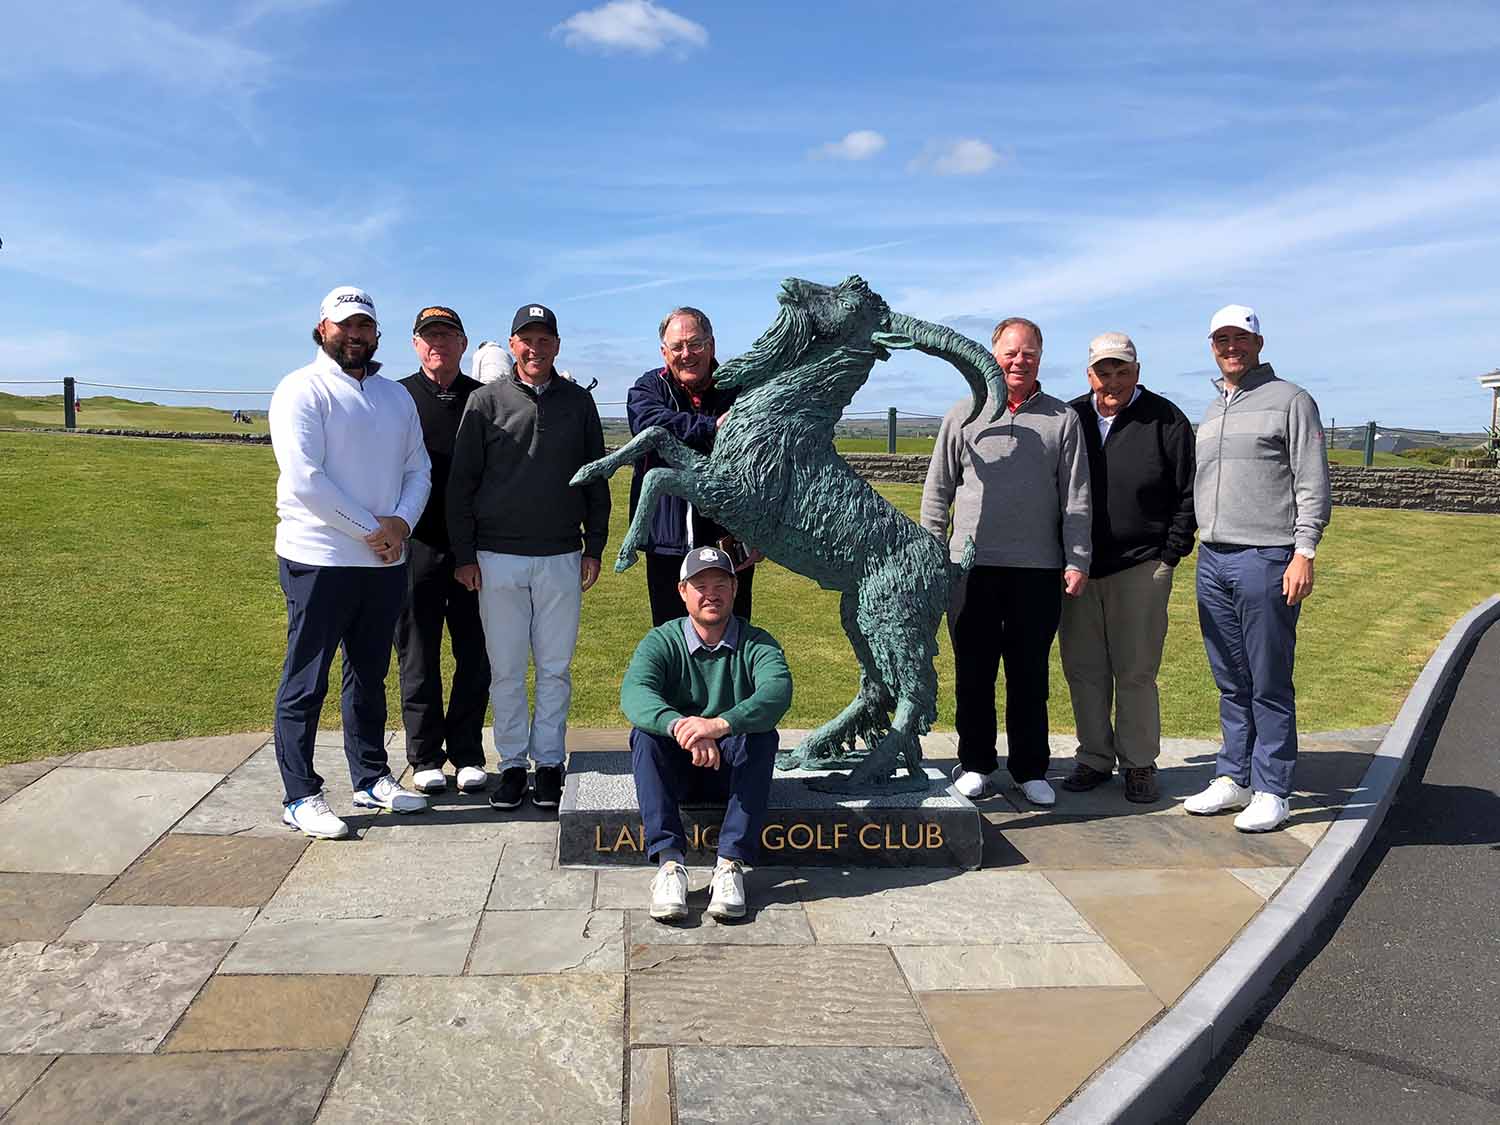 Golfers in Ireland - Planning golf trips on own.